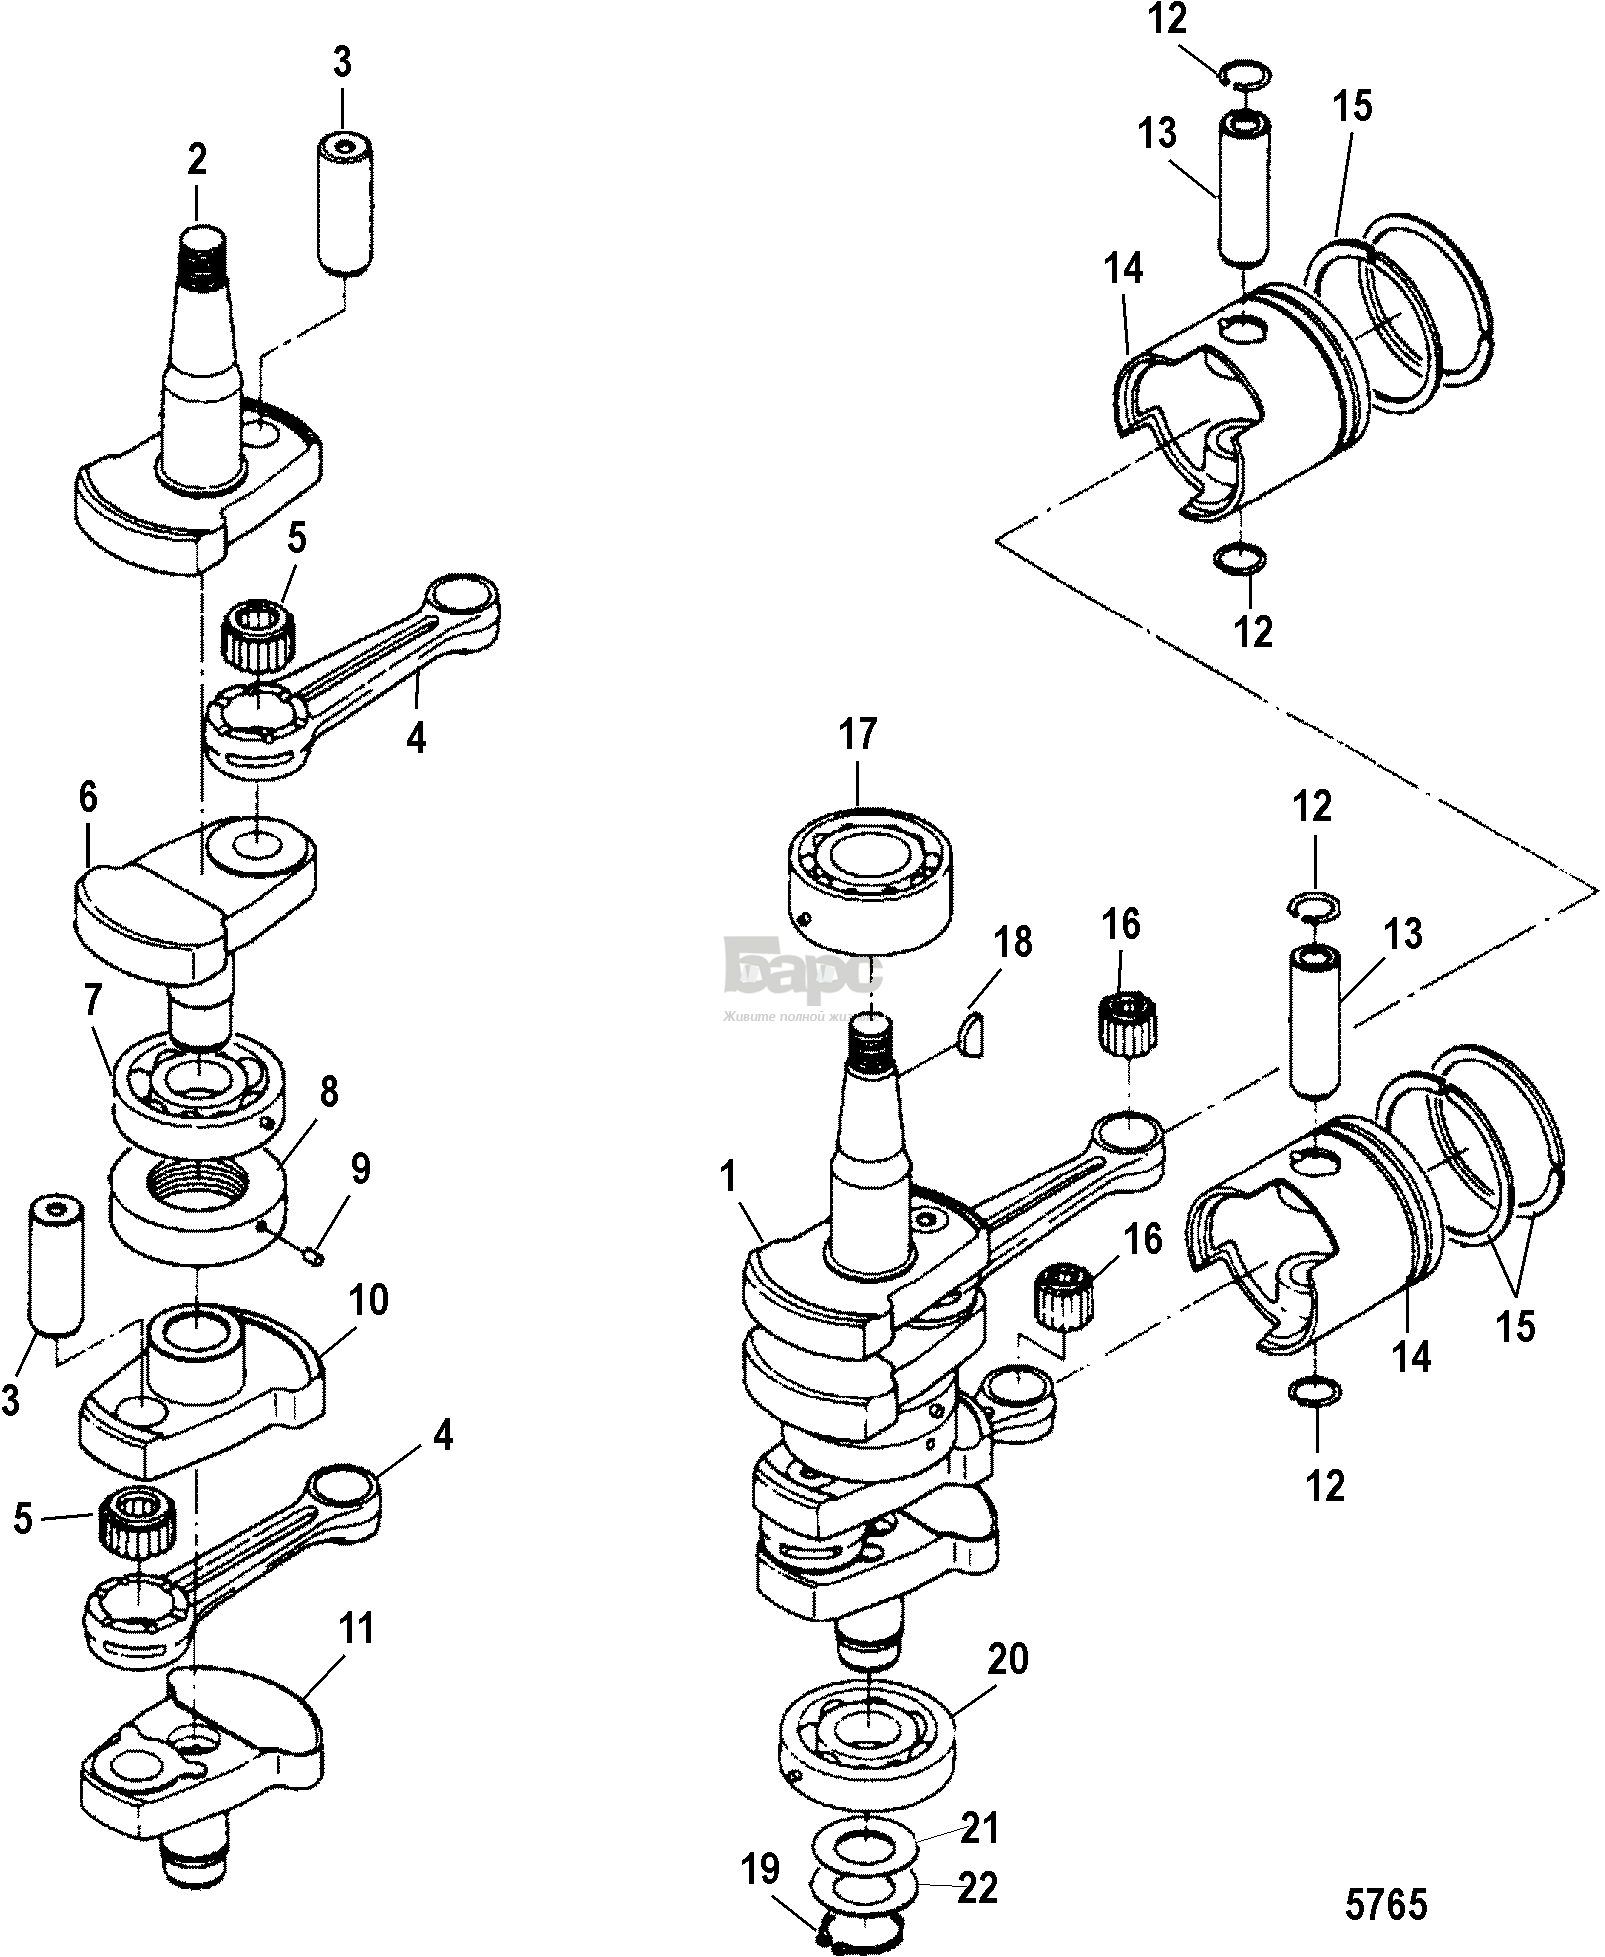 Crankshaft, Pistons and Connecting Rod